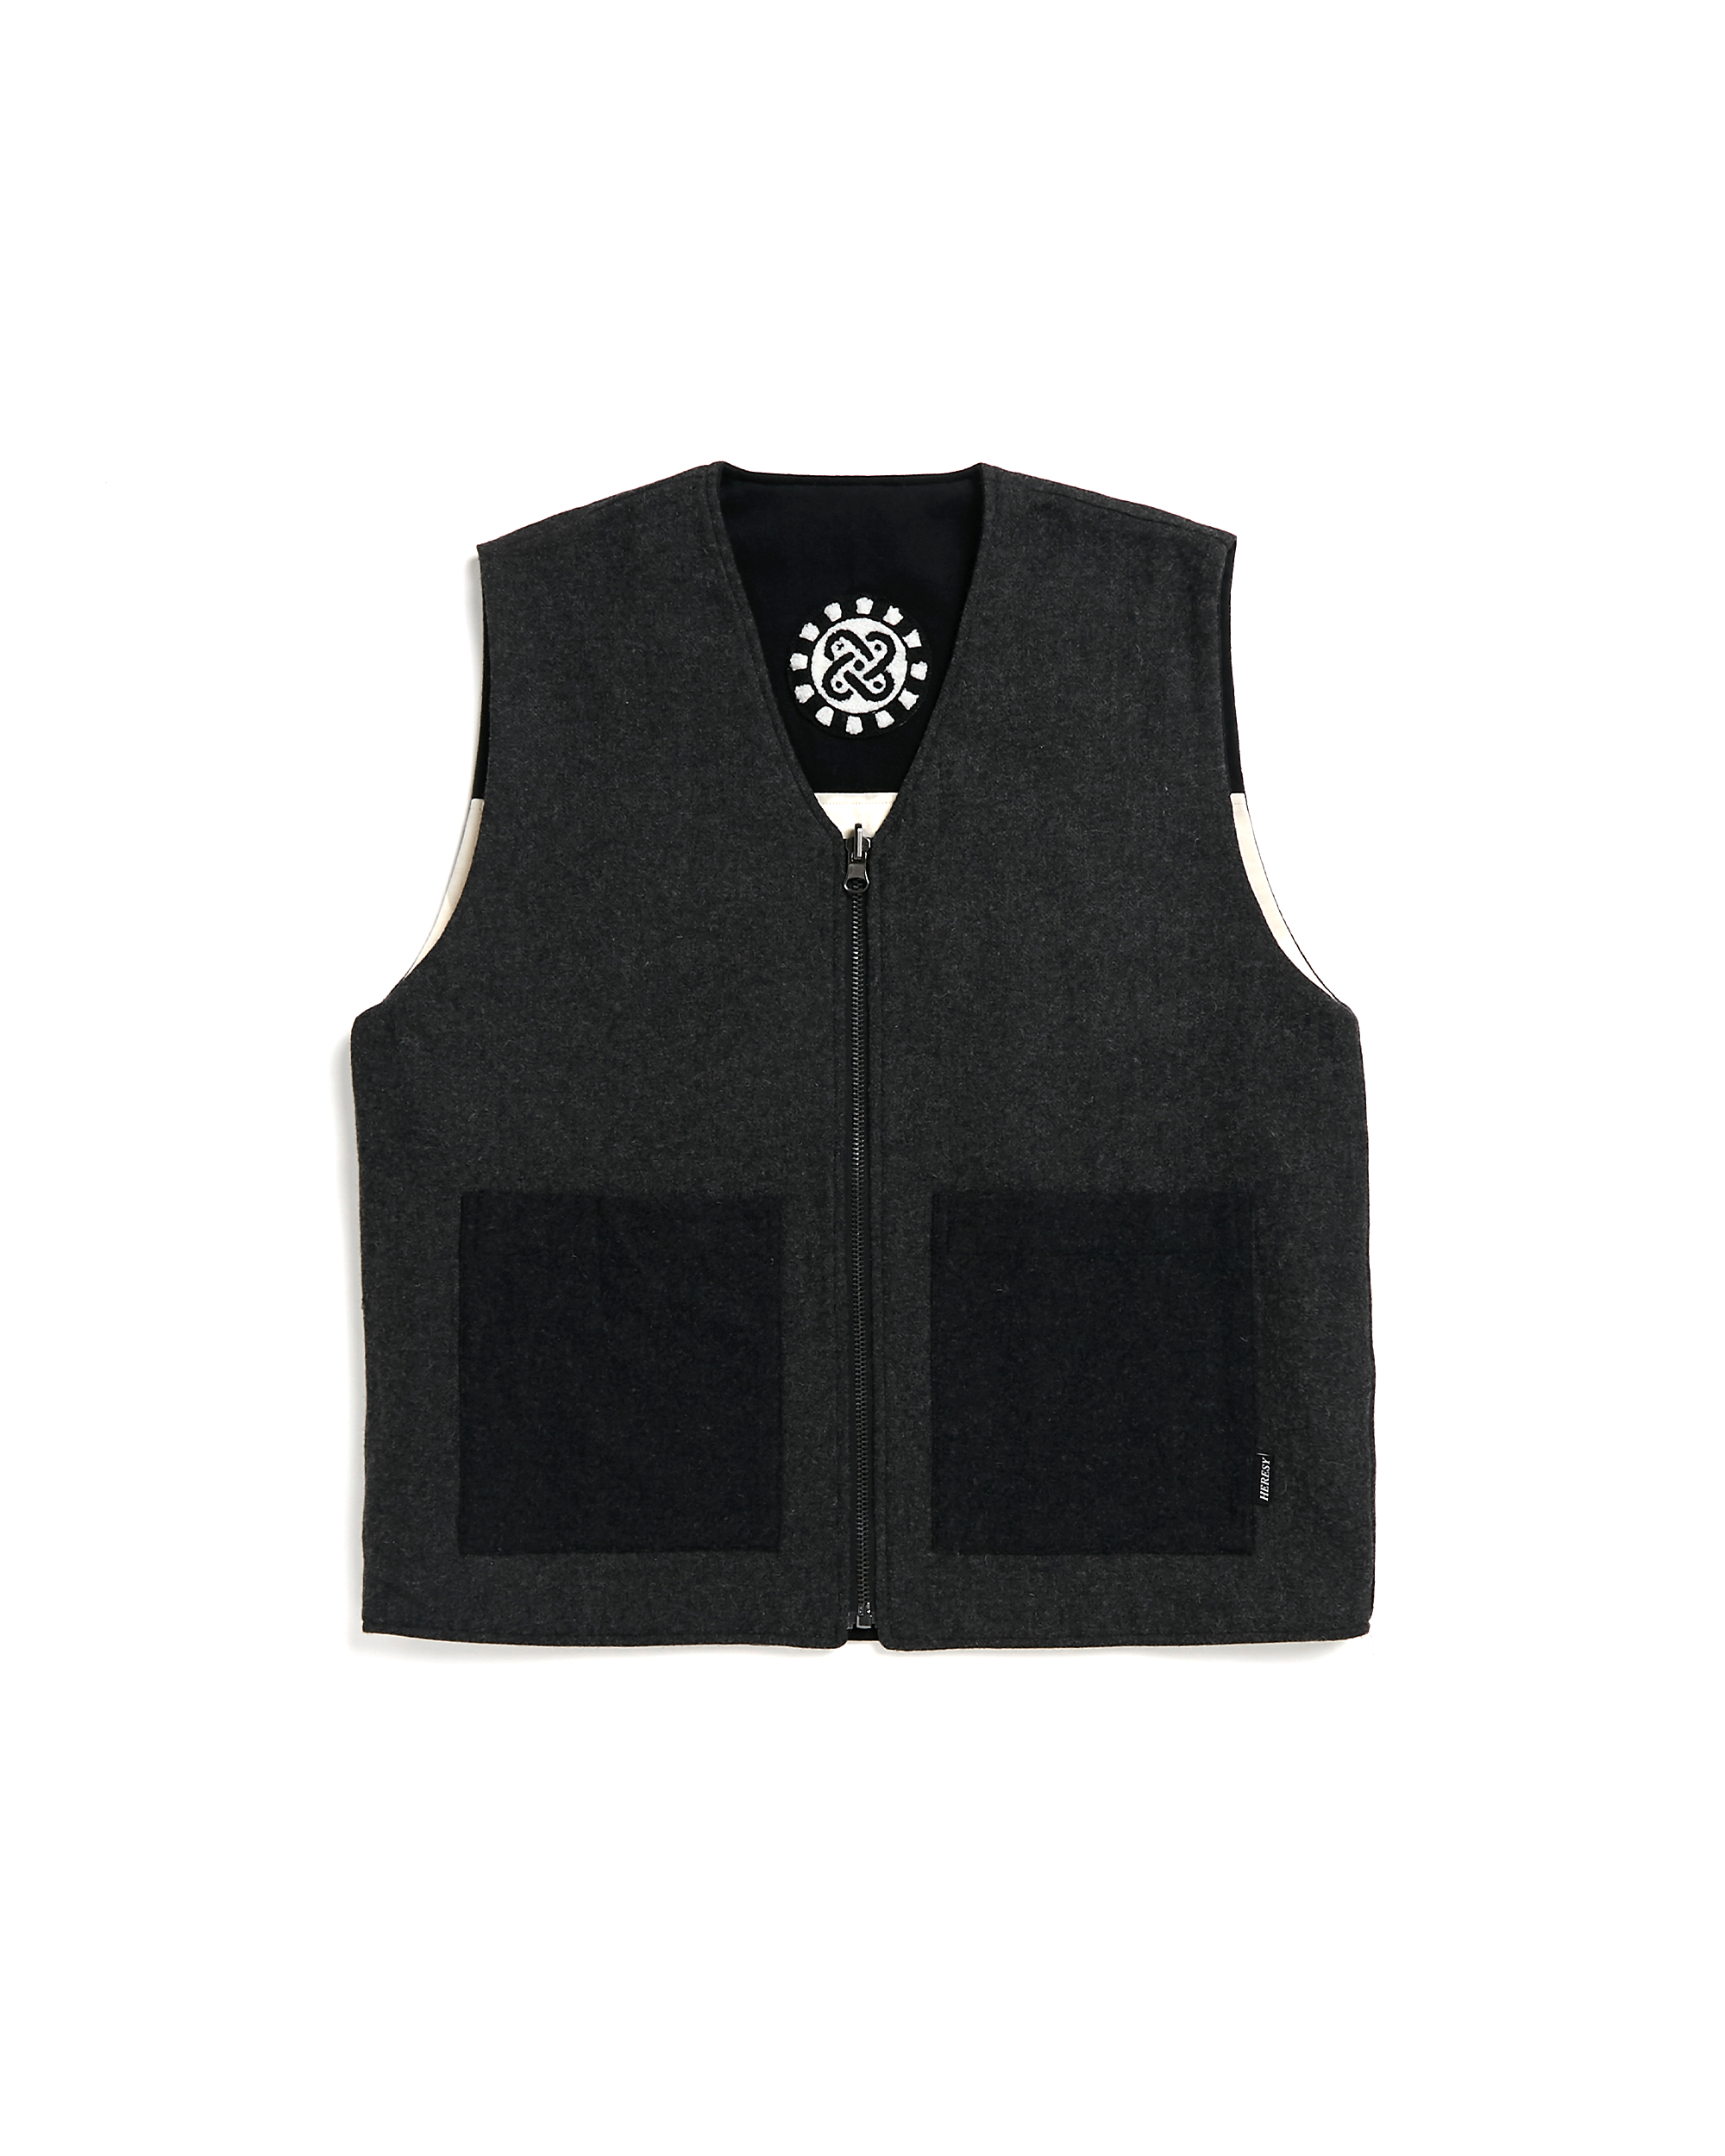 Groundsman Reversible Vest - Black / Ecru / Gray